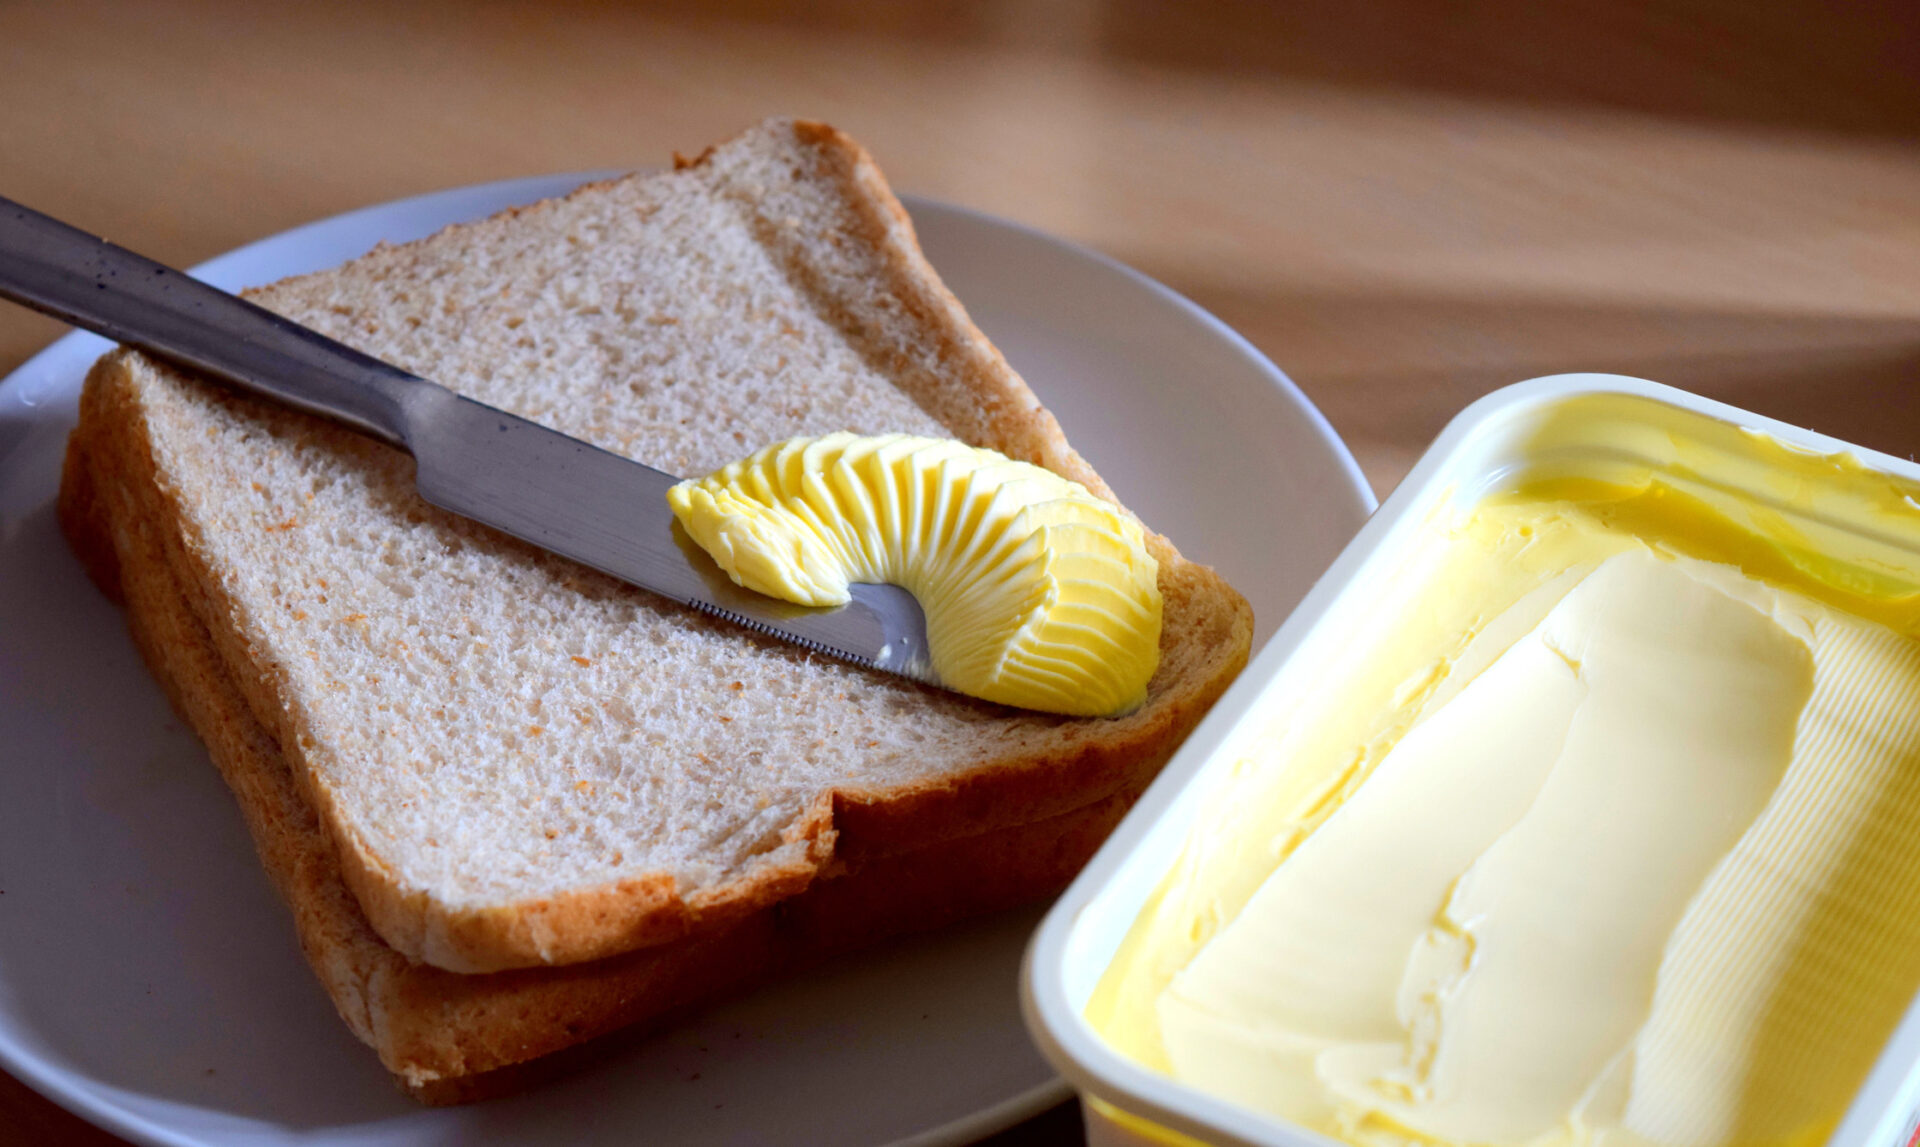 Margarine and Shortening Market